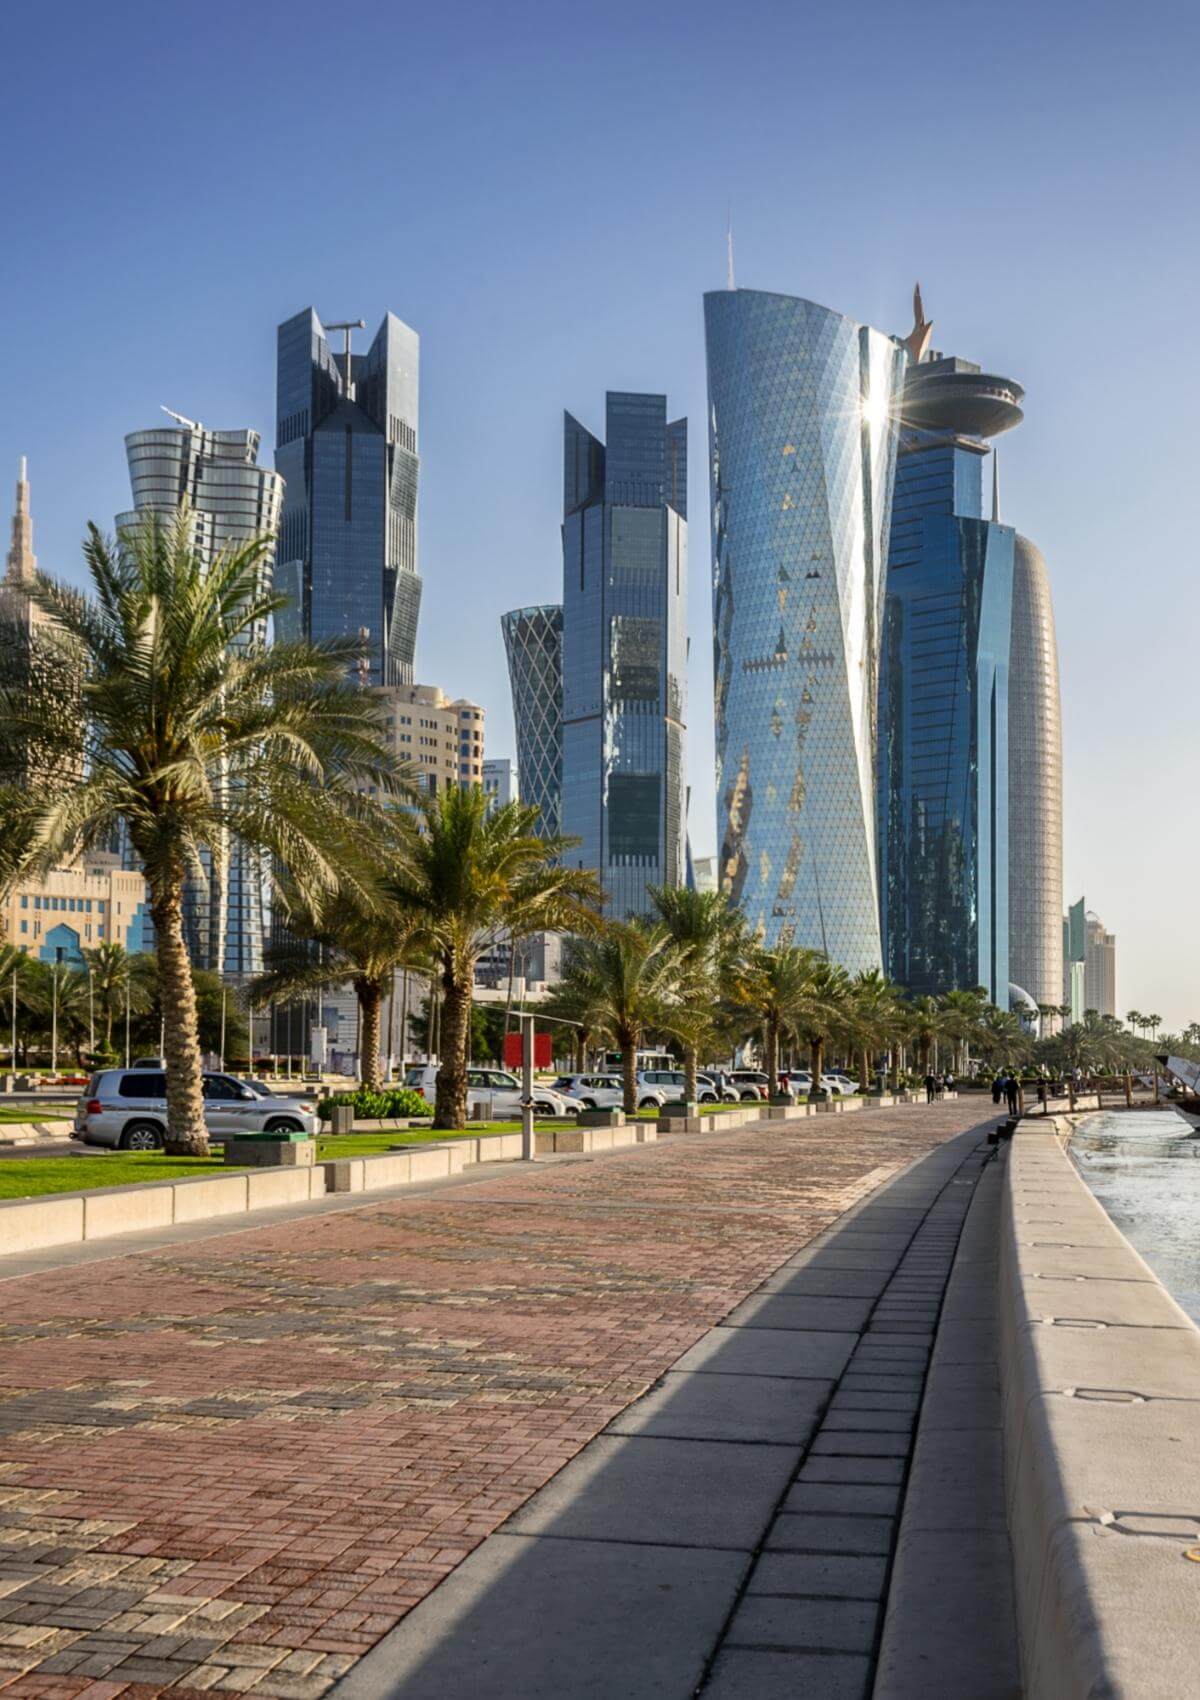 Streets of Doha, Qatar